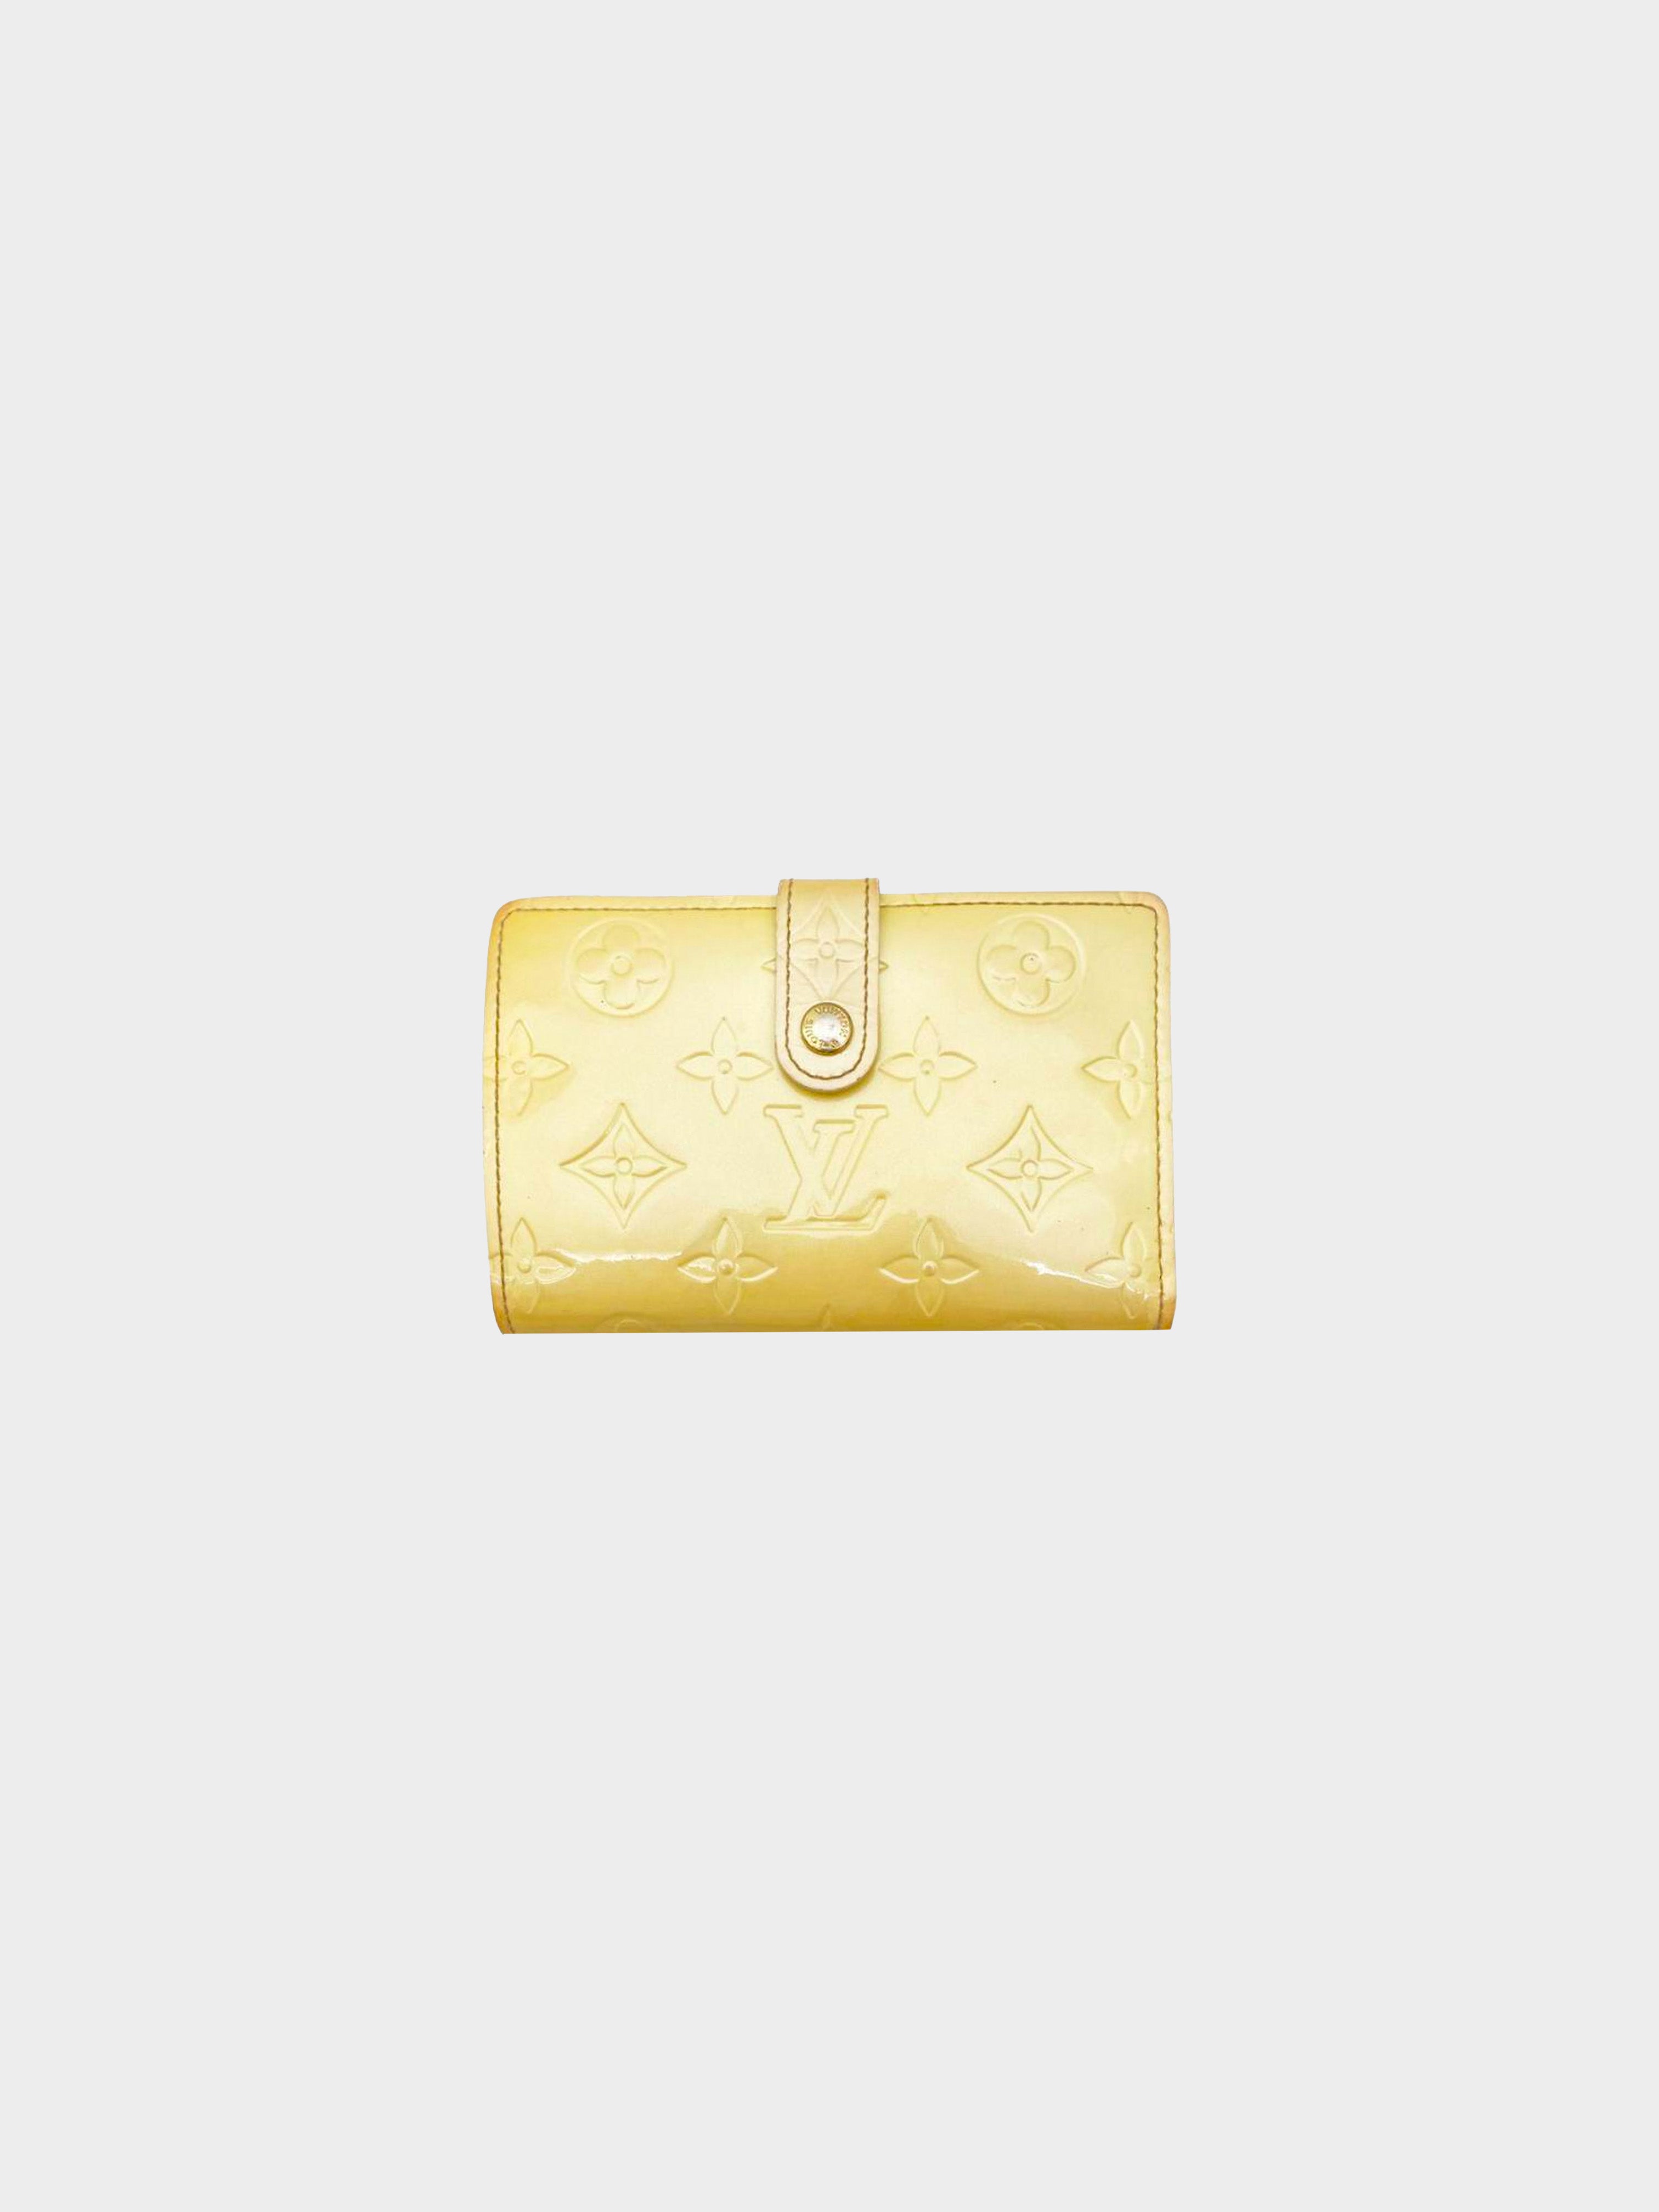 Louis Vuitton, Bags, Louis Vuitton French Monogram Vernis Wallet